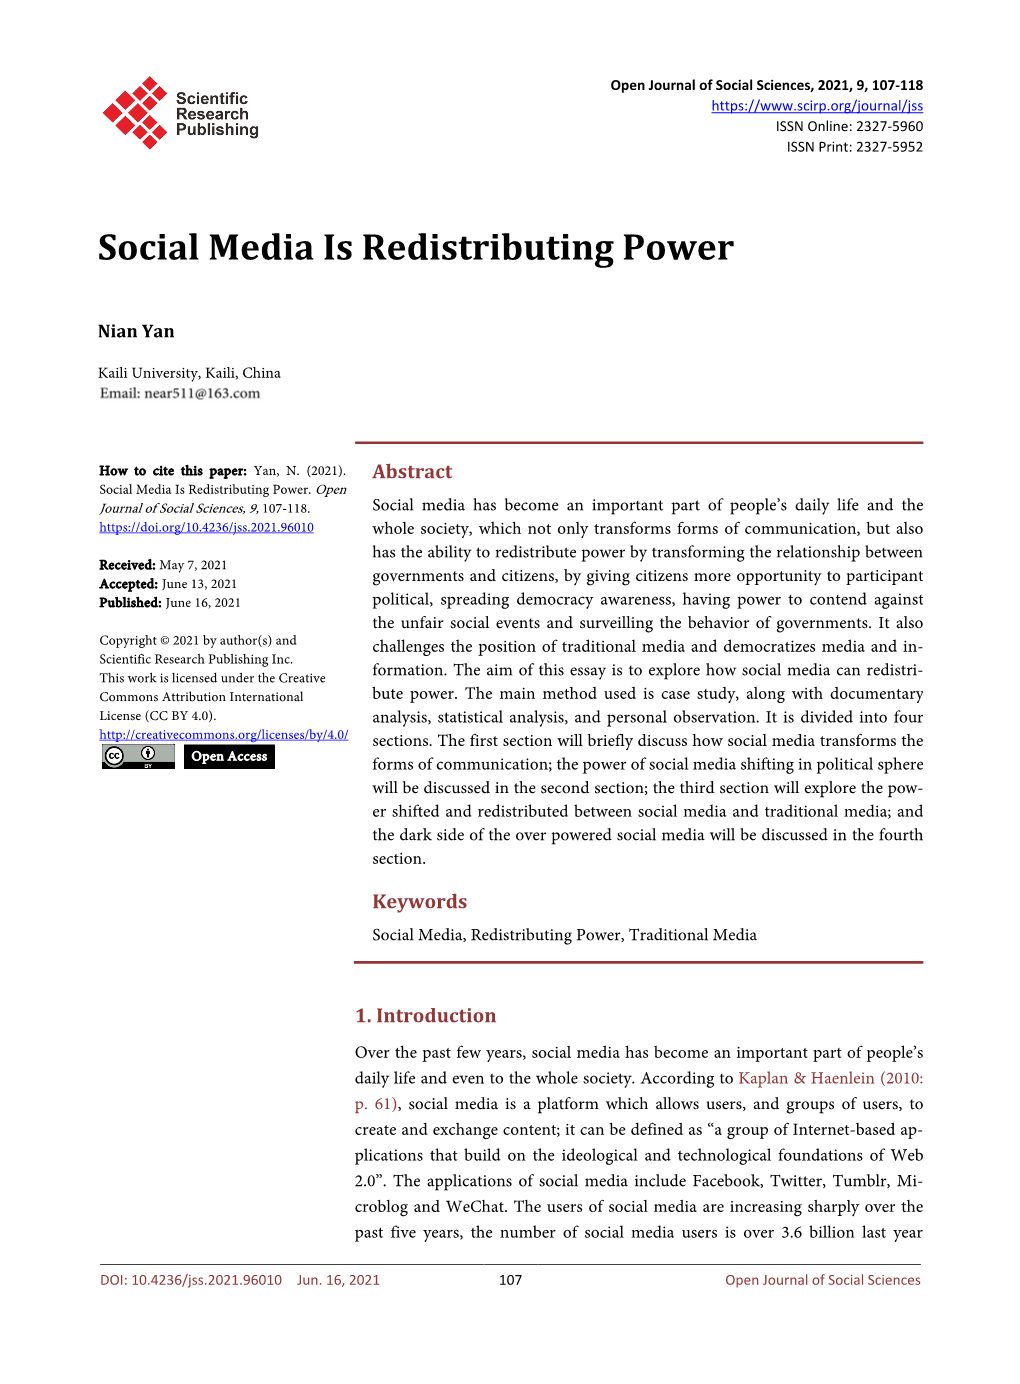 Social Media Is Redistributing Power